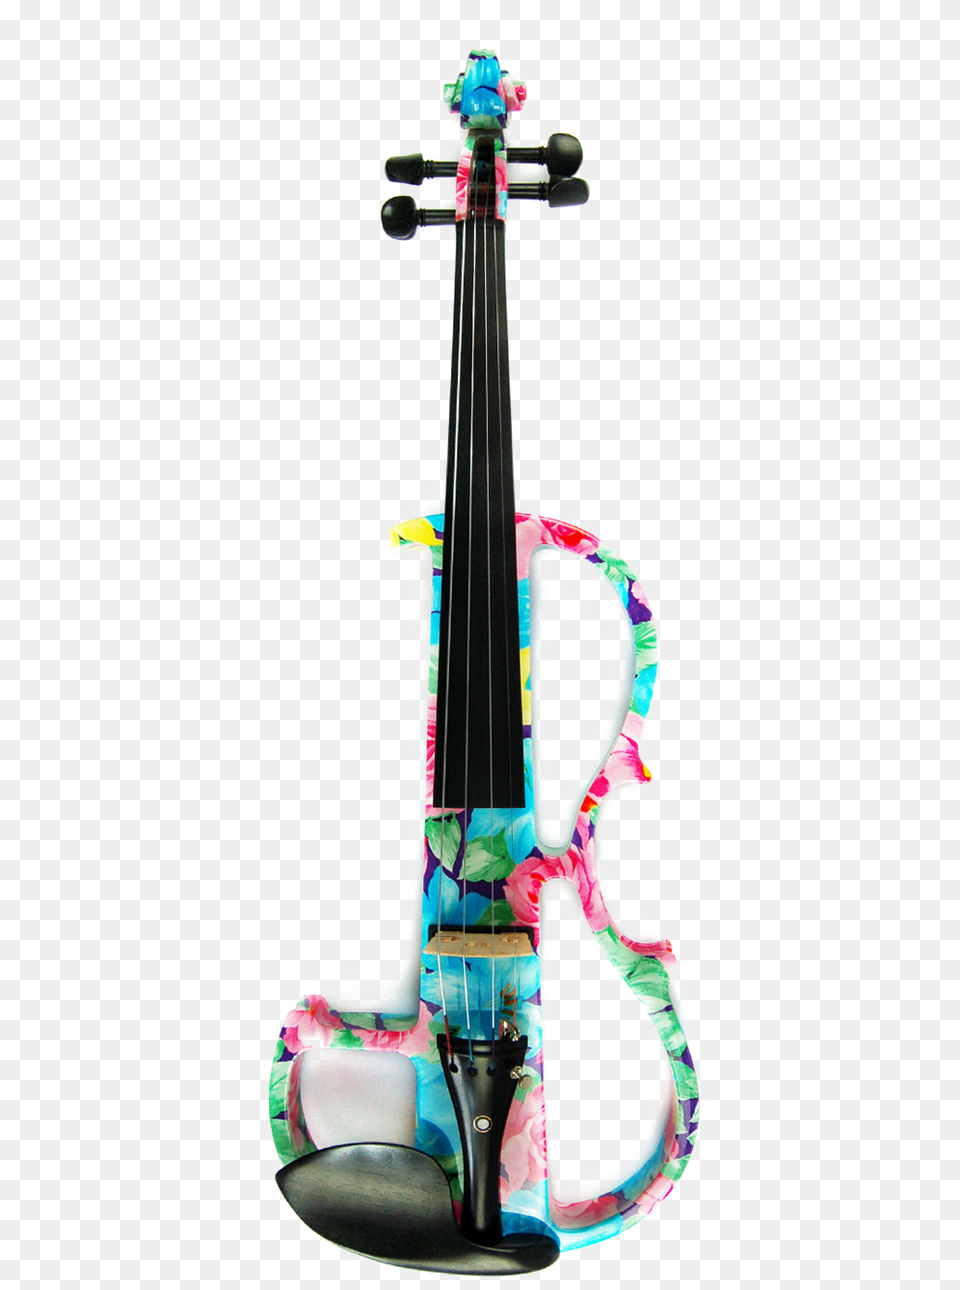 Electric Violins, Musical Instrument, Violin Png